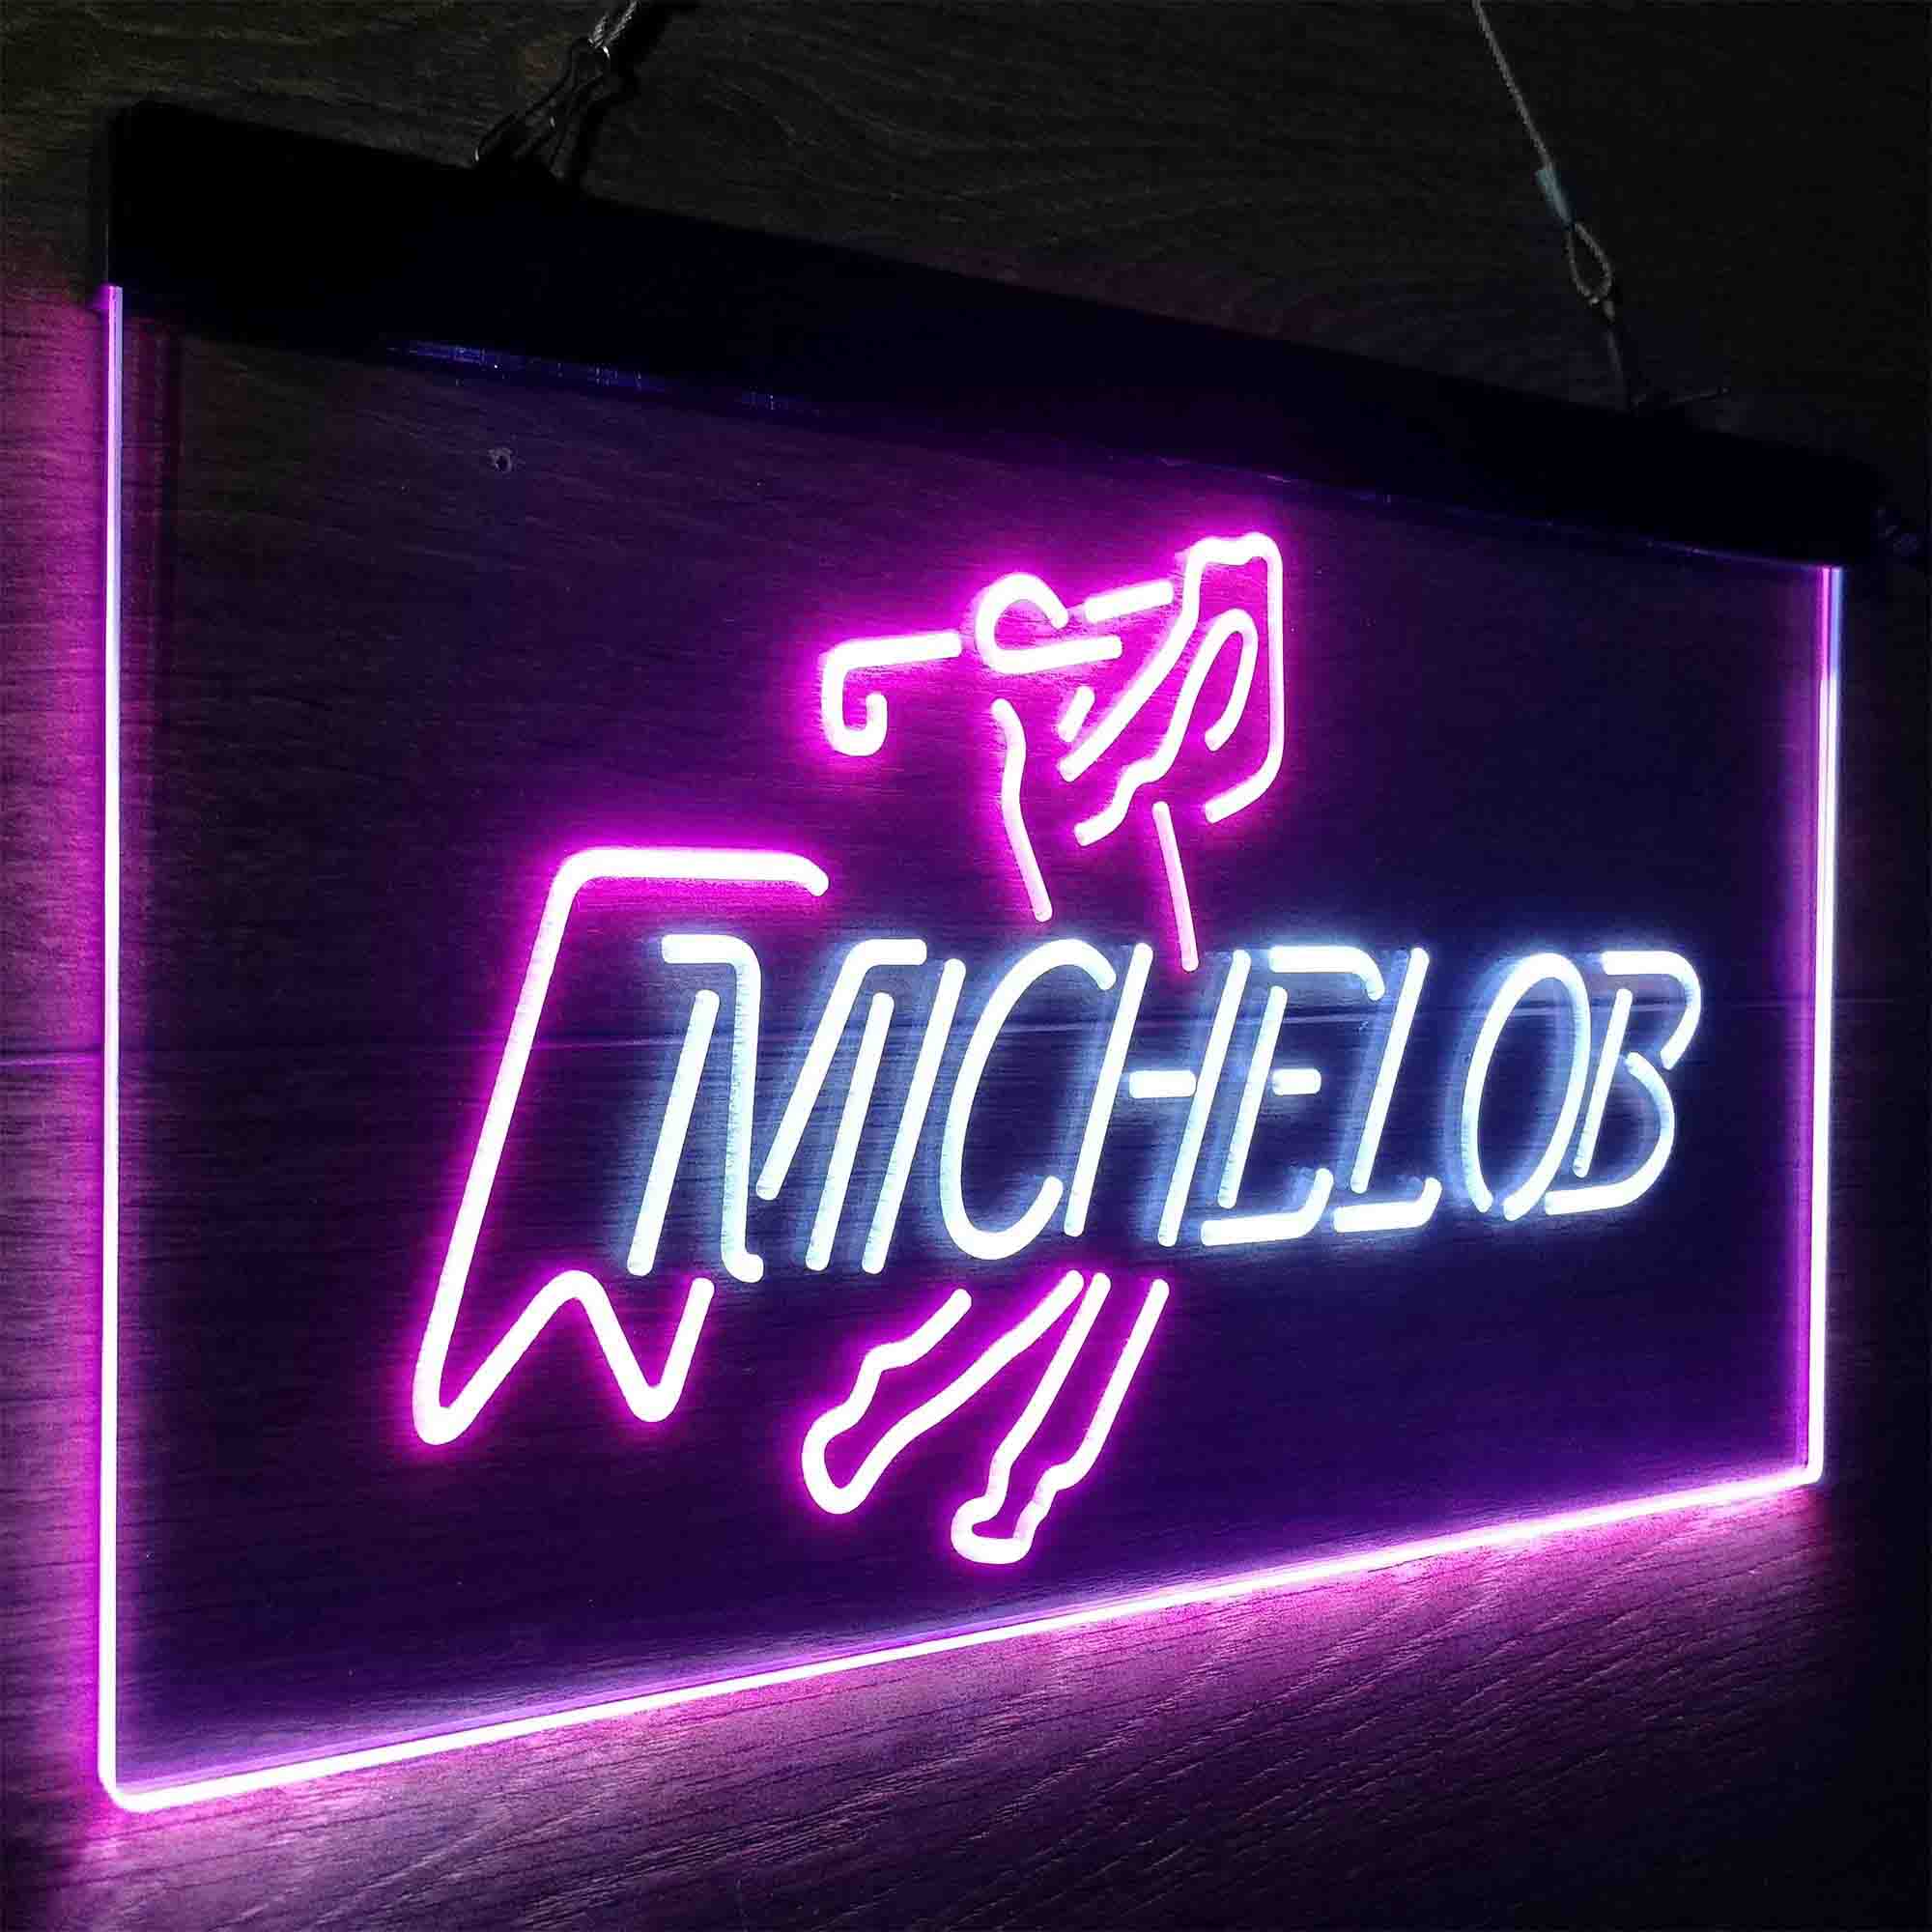 Michelob Golf Neon-Like LED Sign